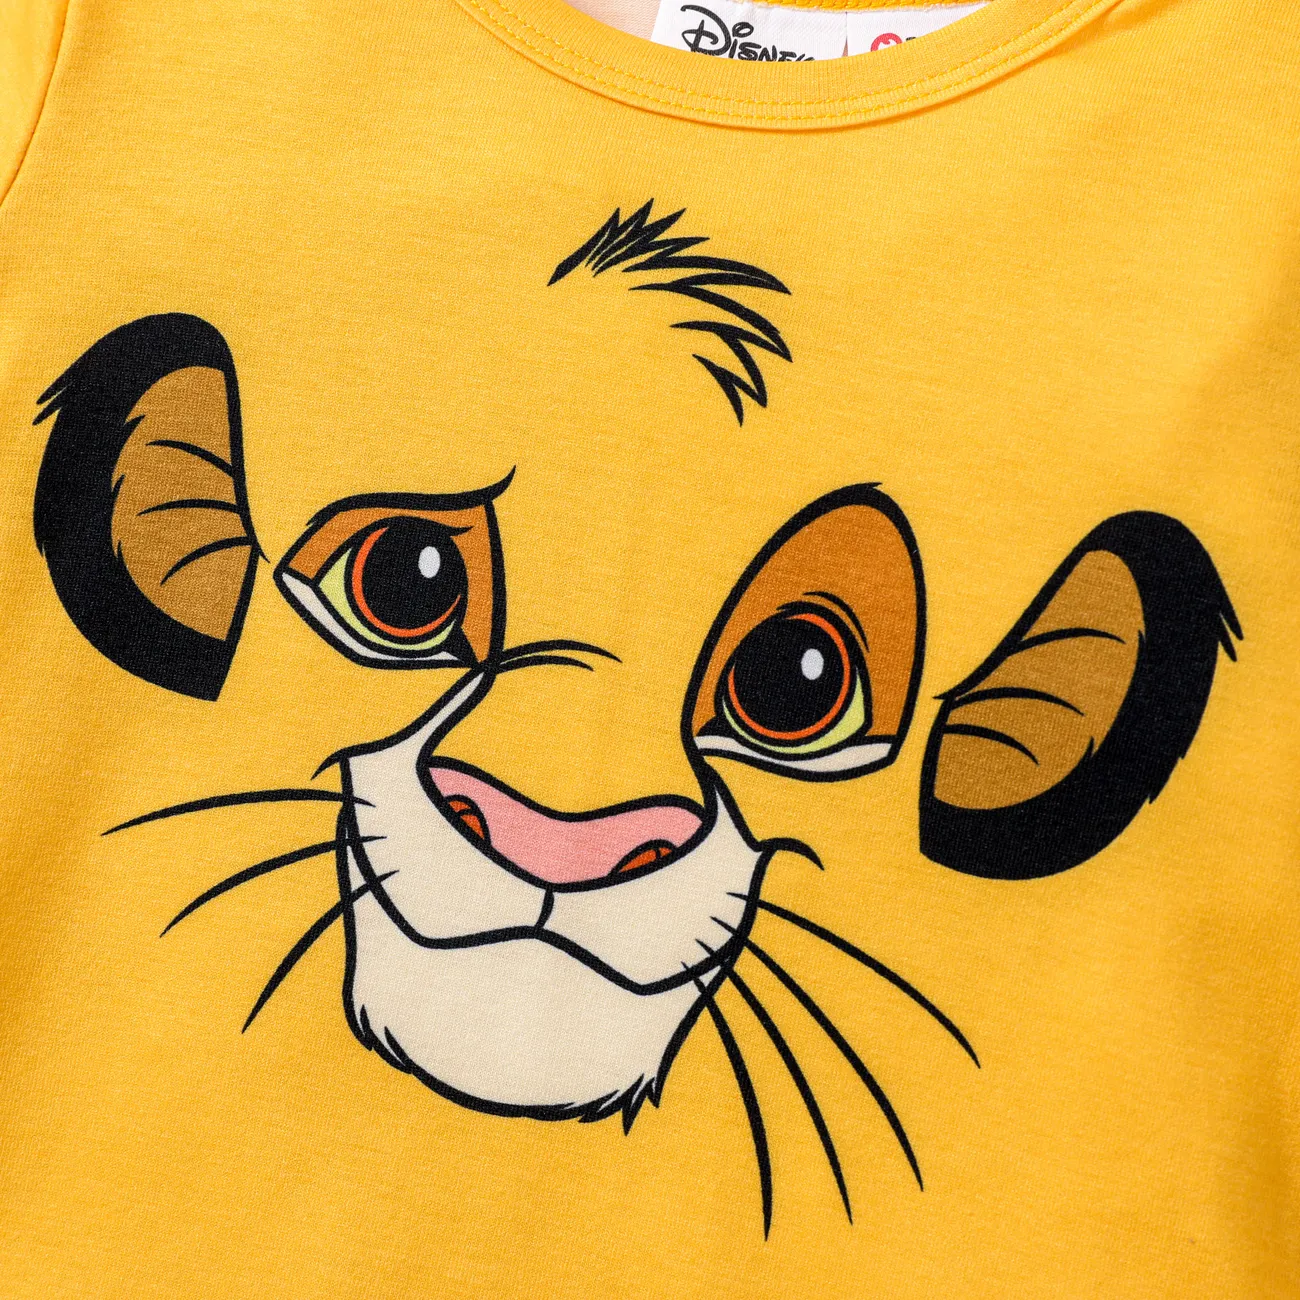 Disney Lion King Simba 1pc Toddler Boy/Girl Naia™ Character Print T-shirt Yellow big image 1